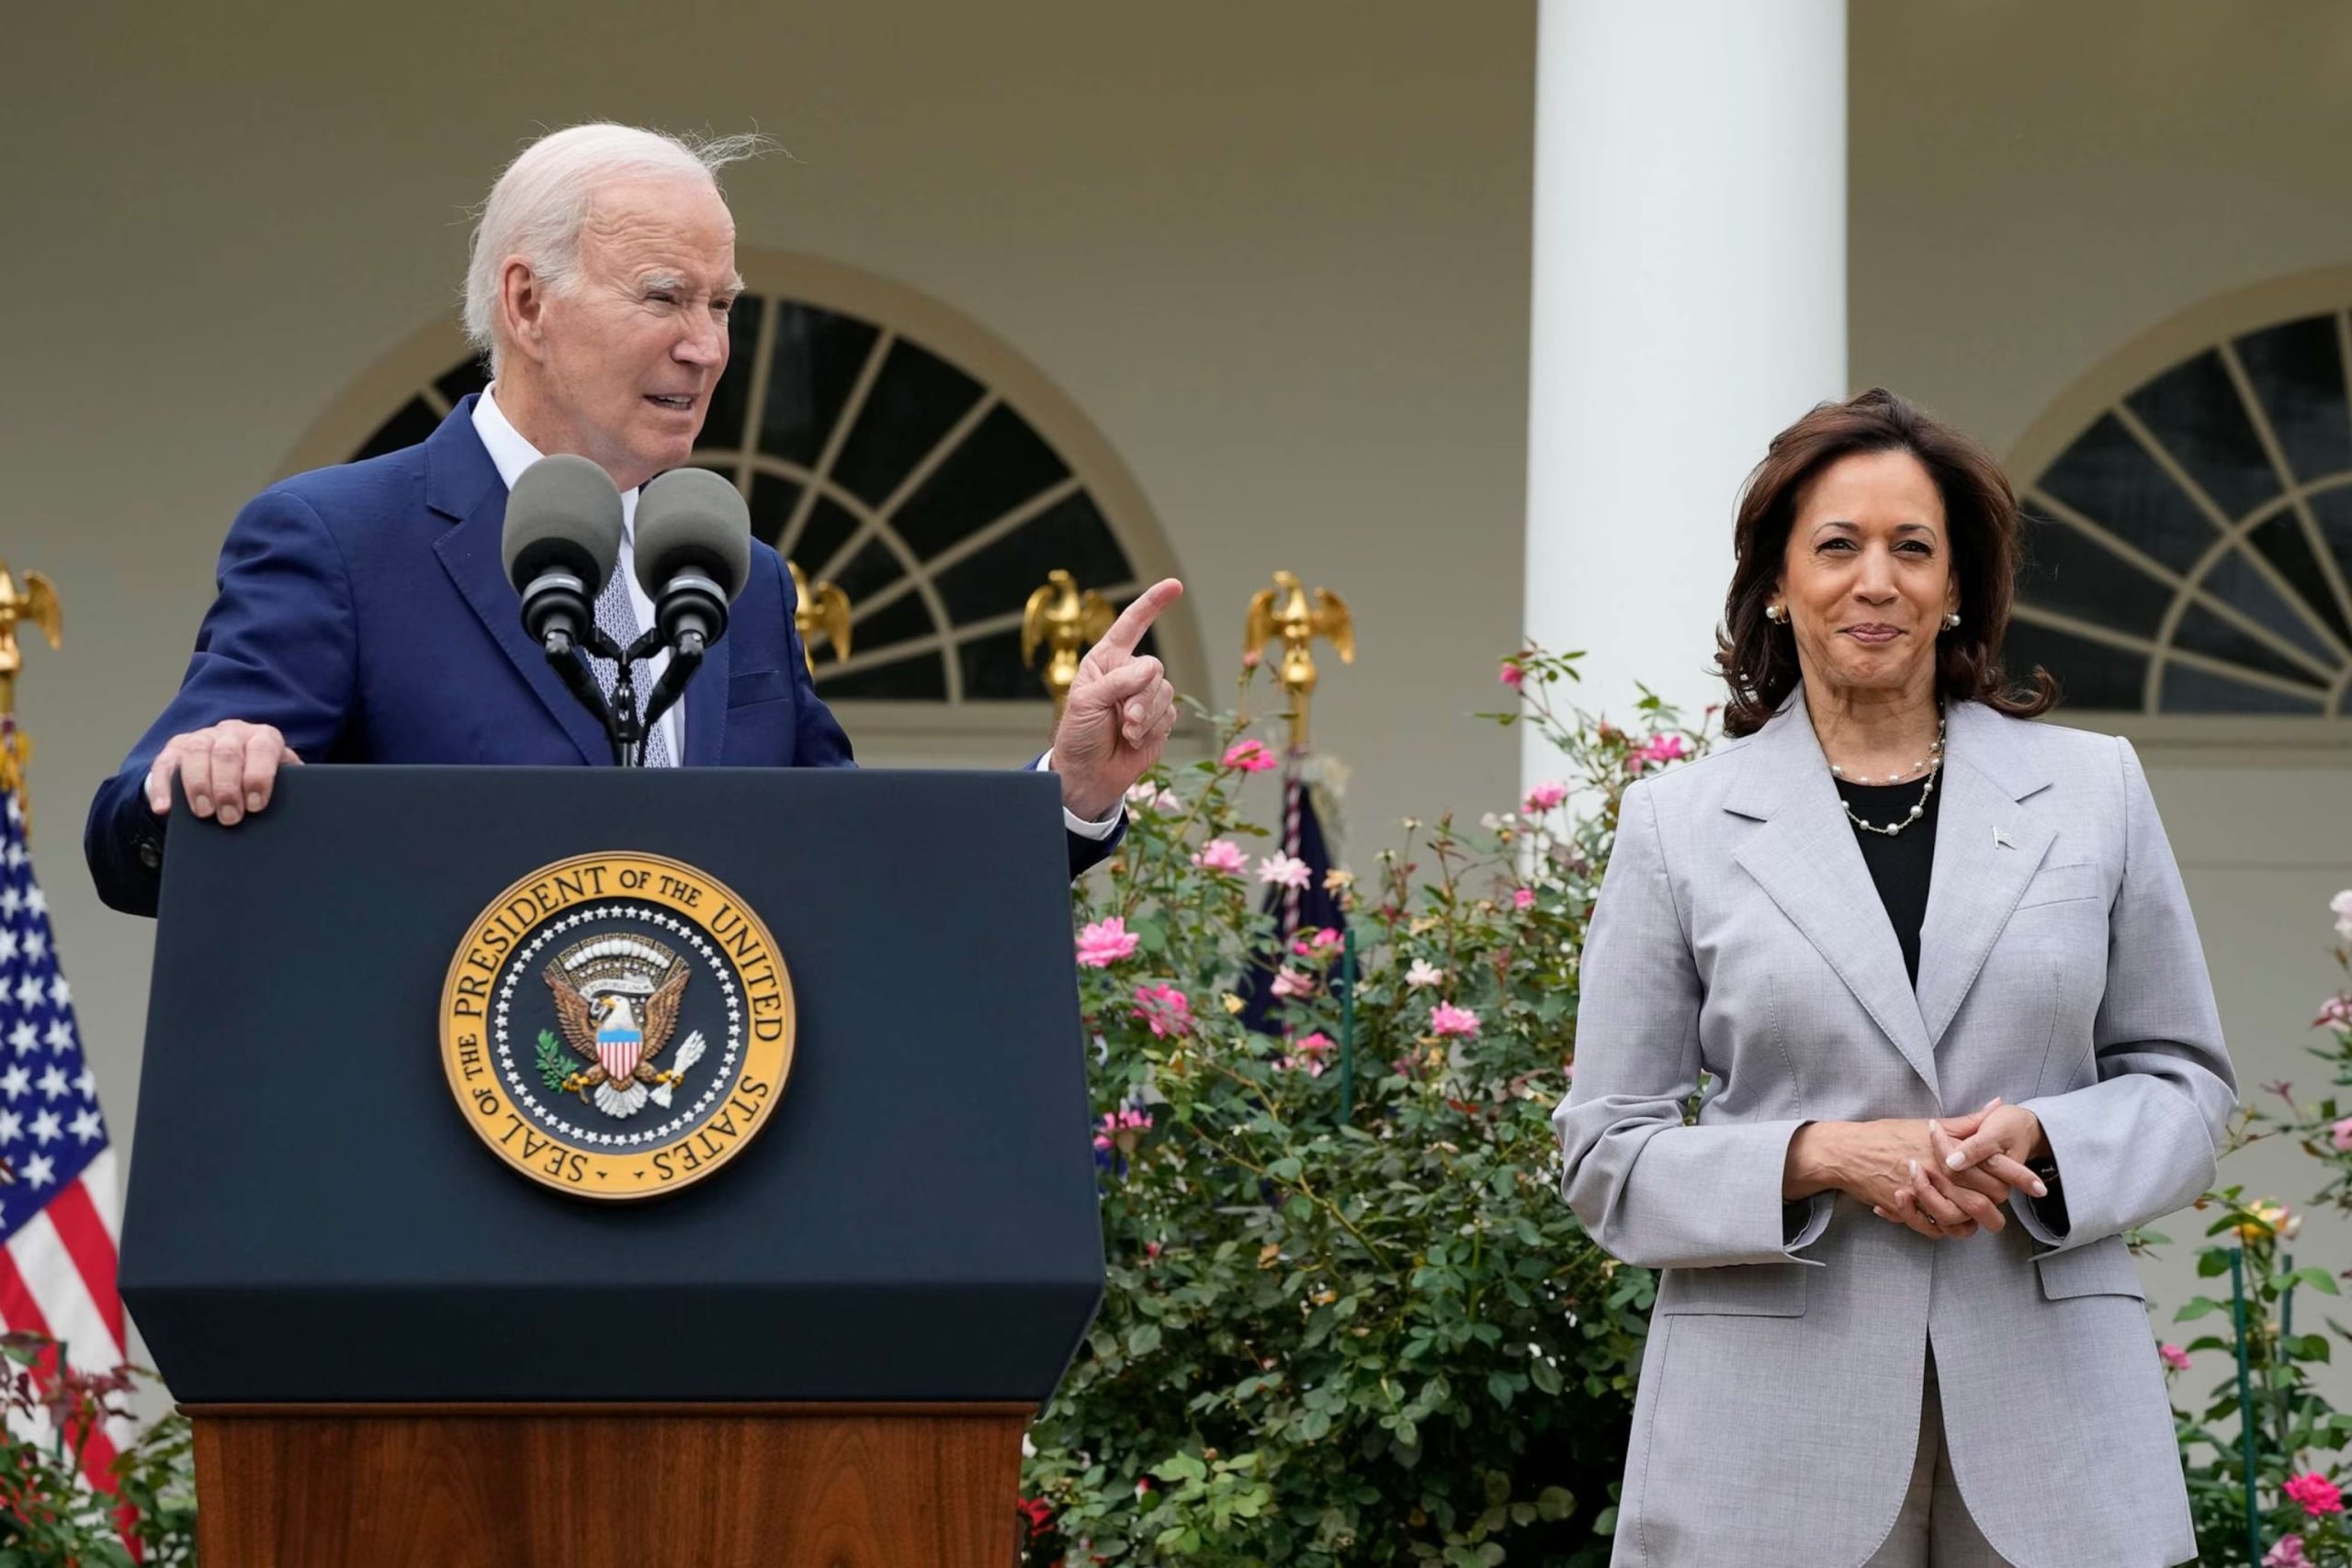 Exclusive: Biden White House Prepares Week of Events Focused on Combating Gun Violence